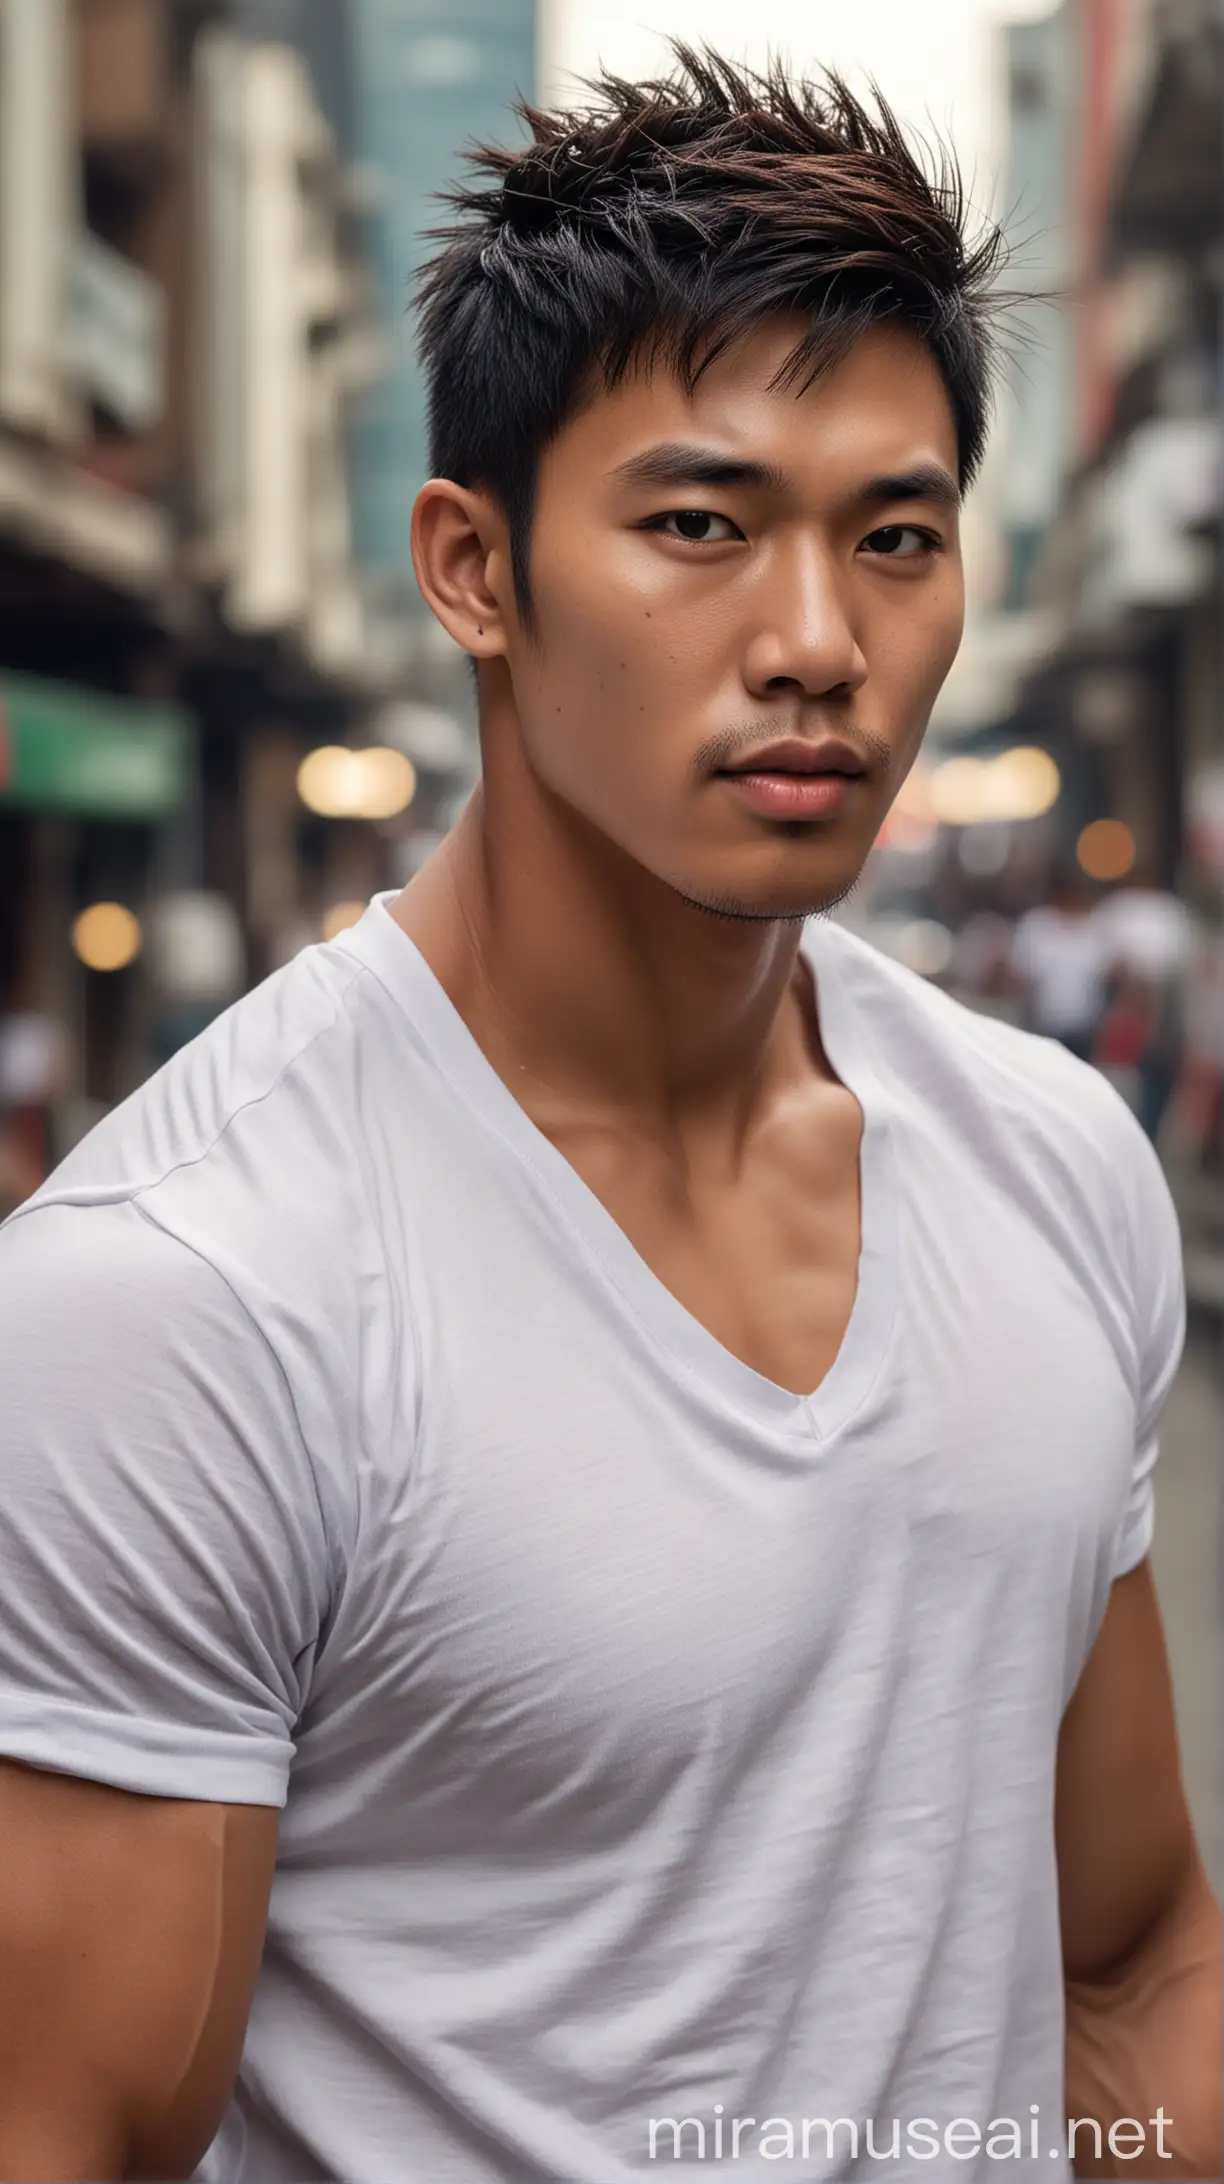 Asian Muscular Man with Stylish Fringed Hair in Jakarta Street Portrait